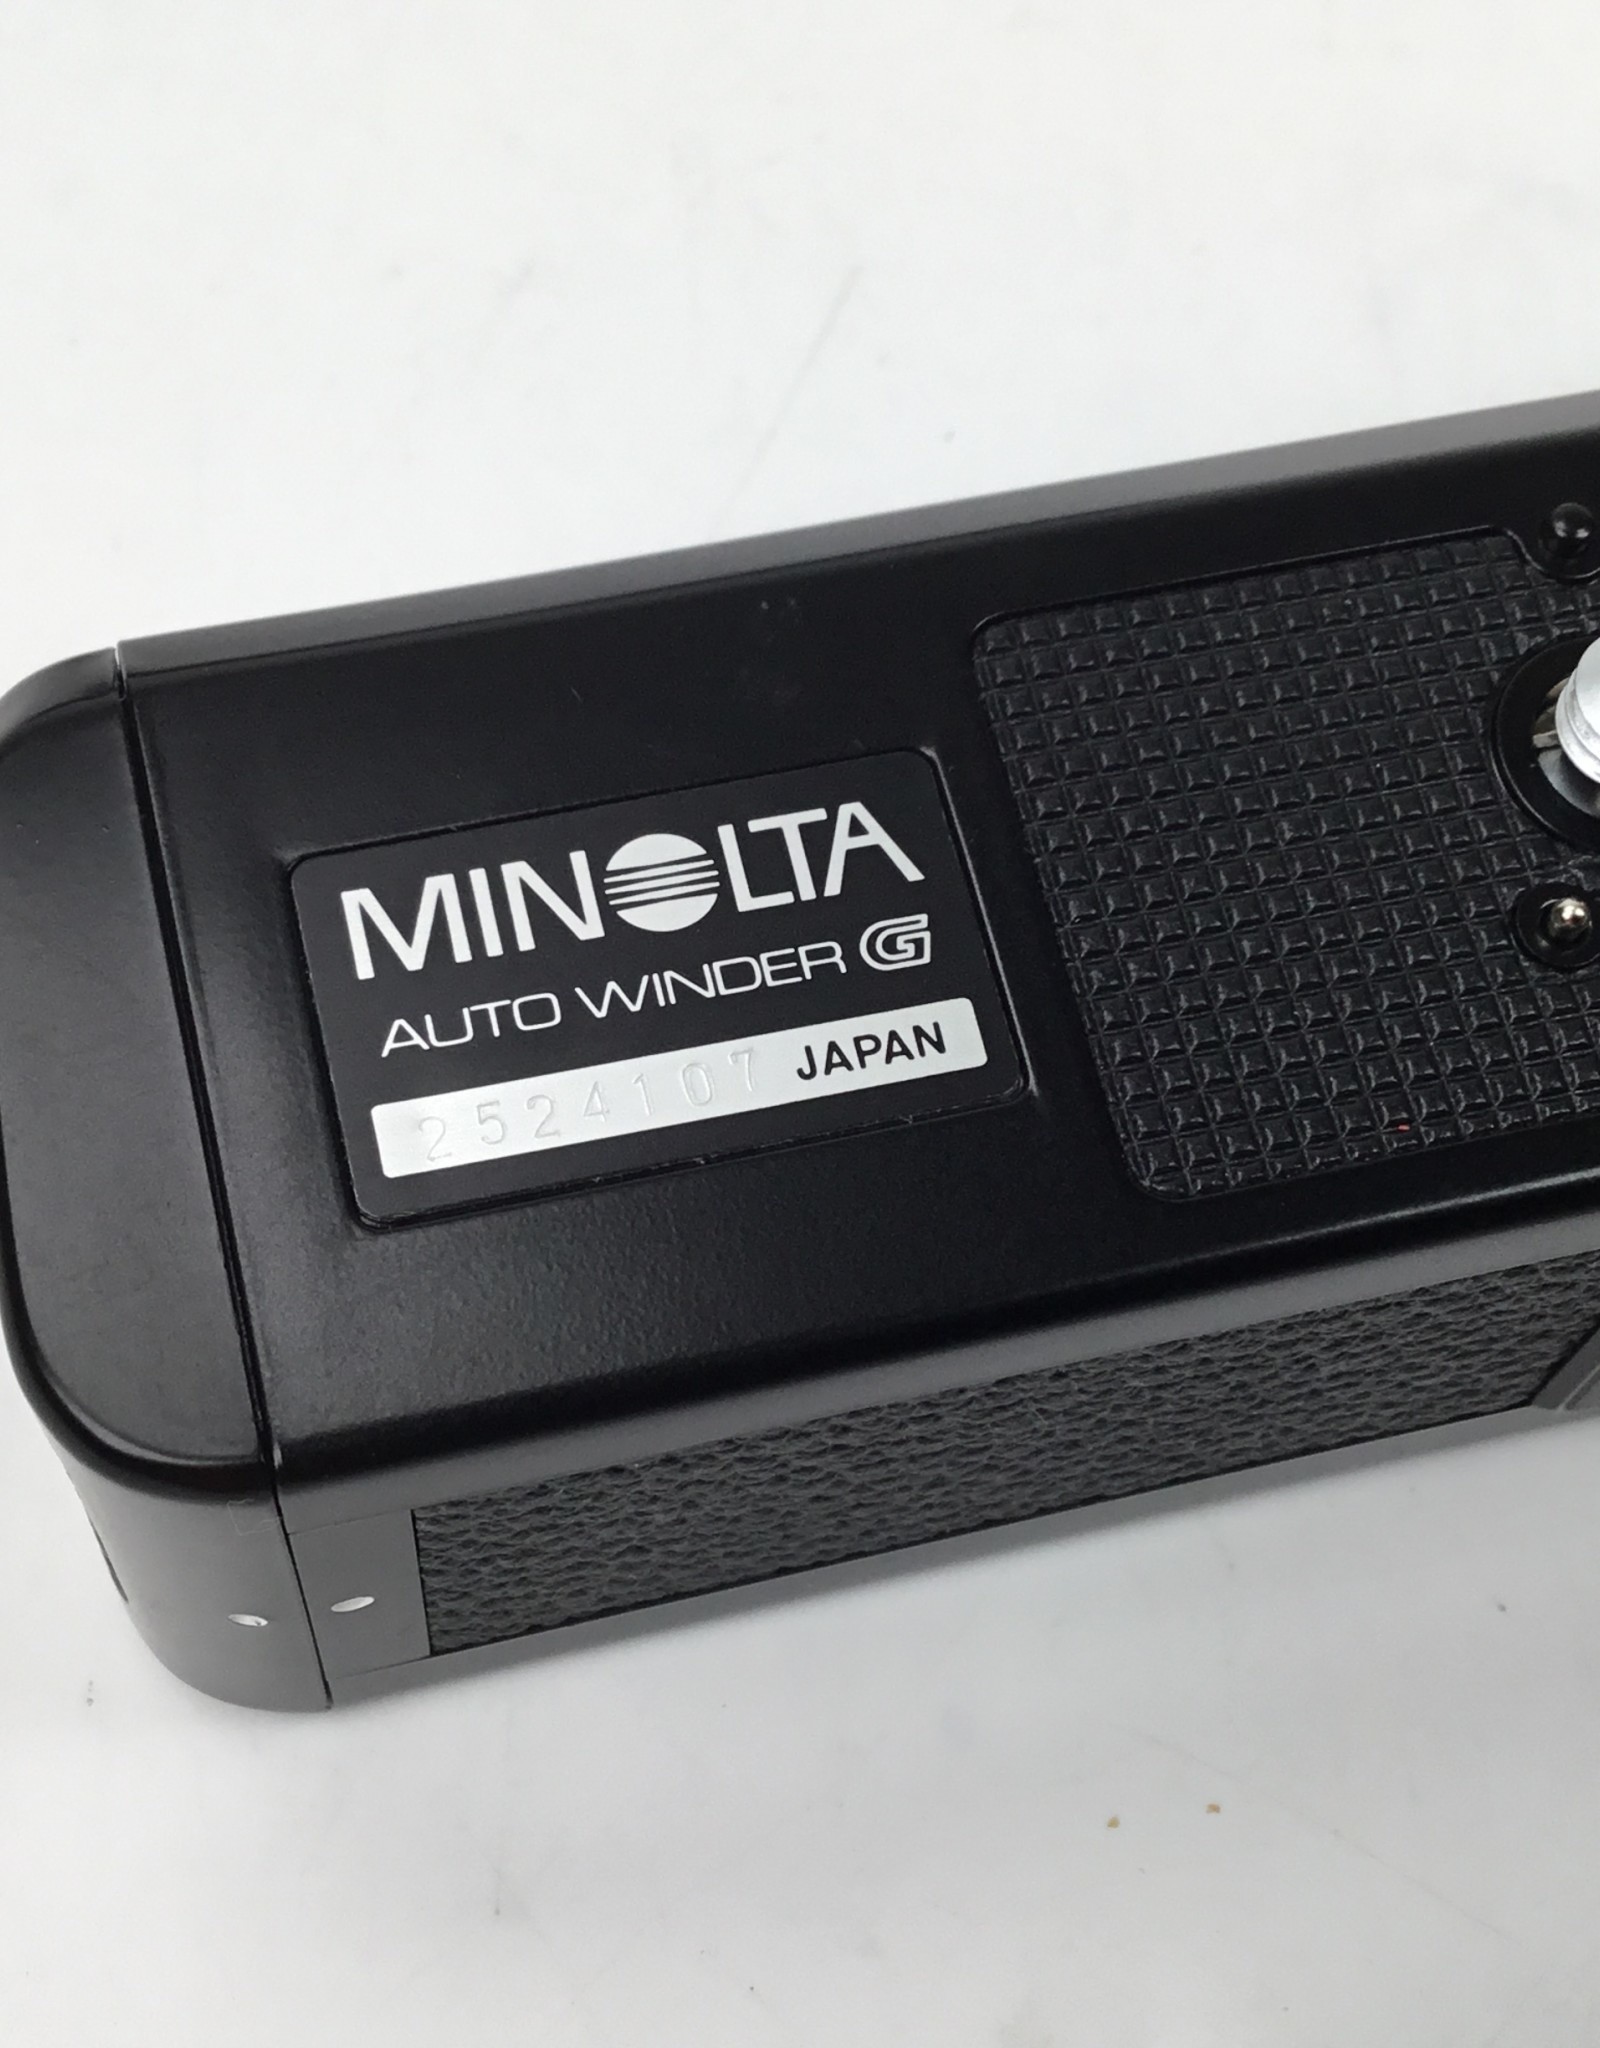 Minolta Minolta Auto Winder G Used Good